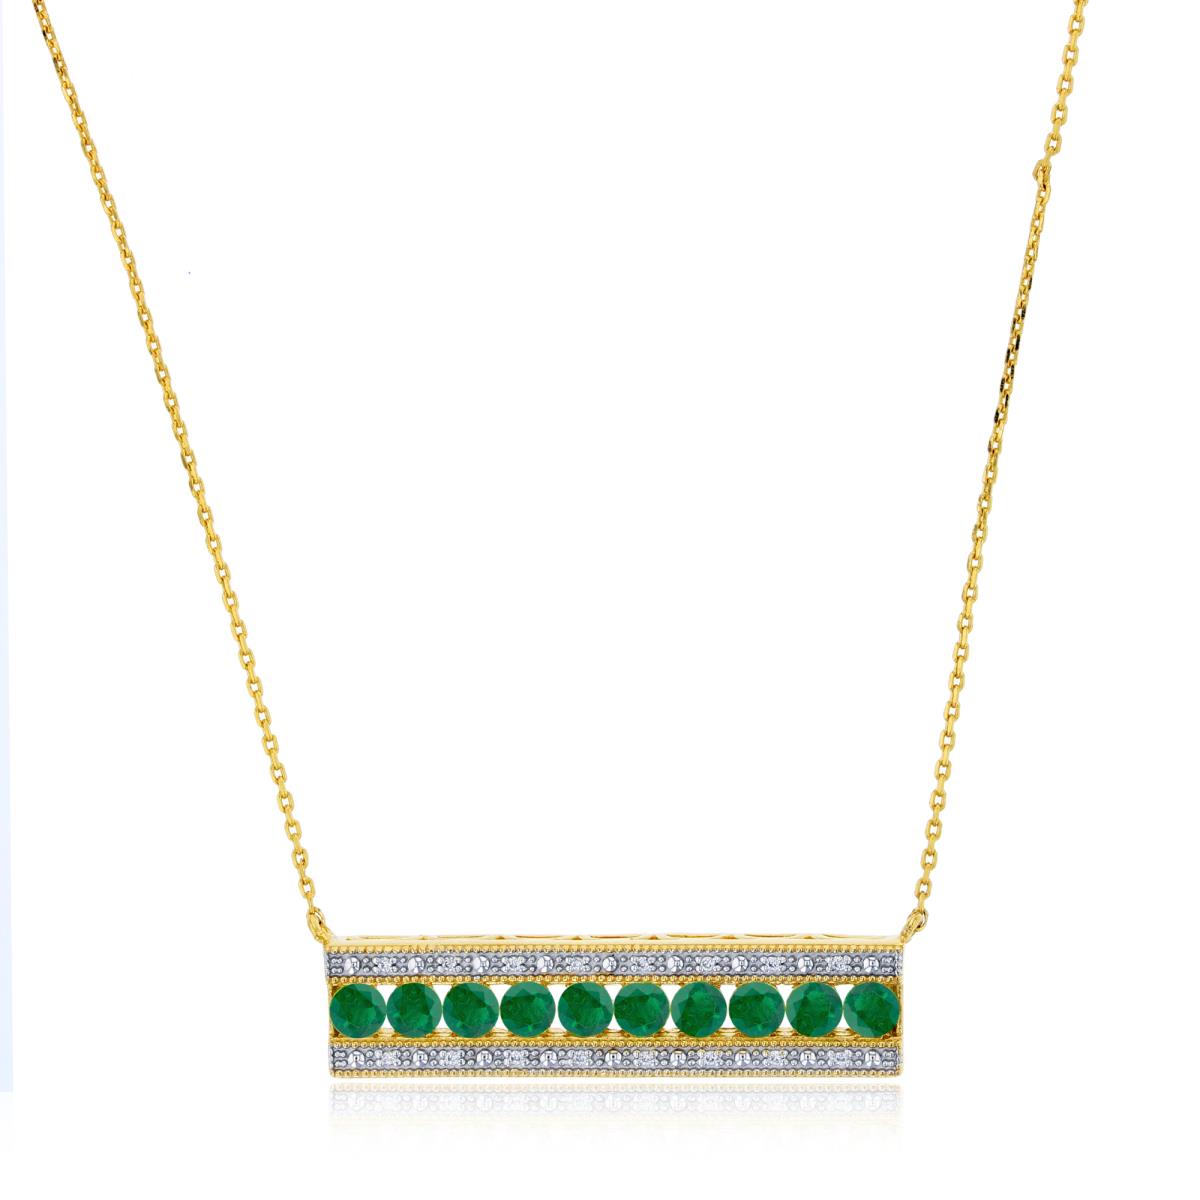 10K Yellow Gold 0.048cttw Rnd Diamonds & 3mm Rnd Created Emerald Bar 18" Necklace